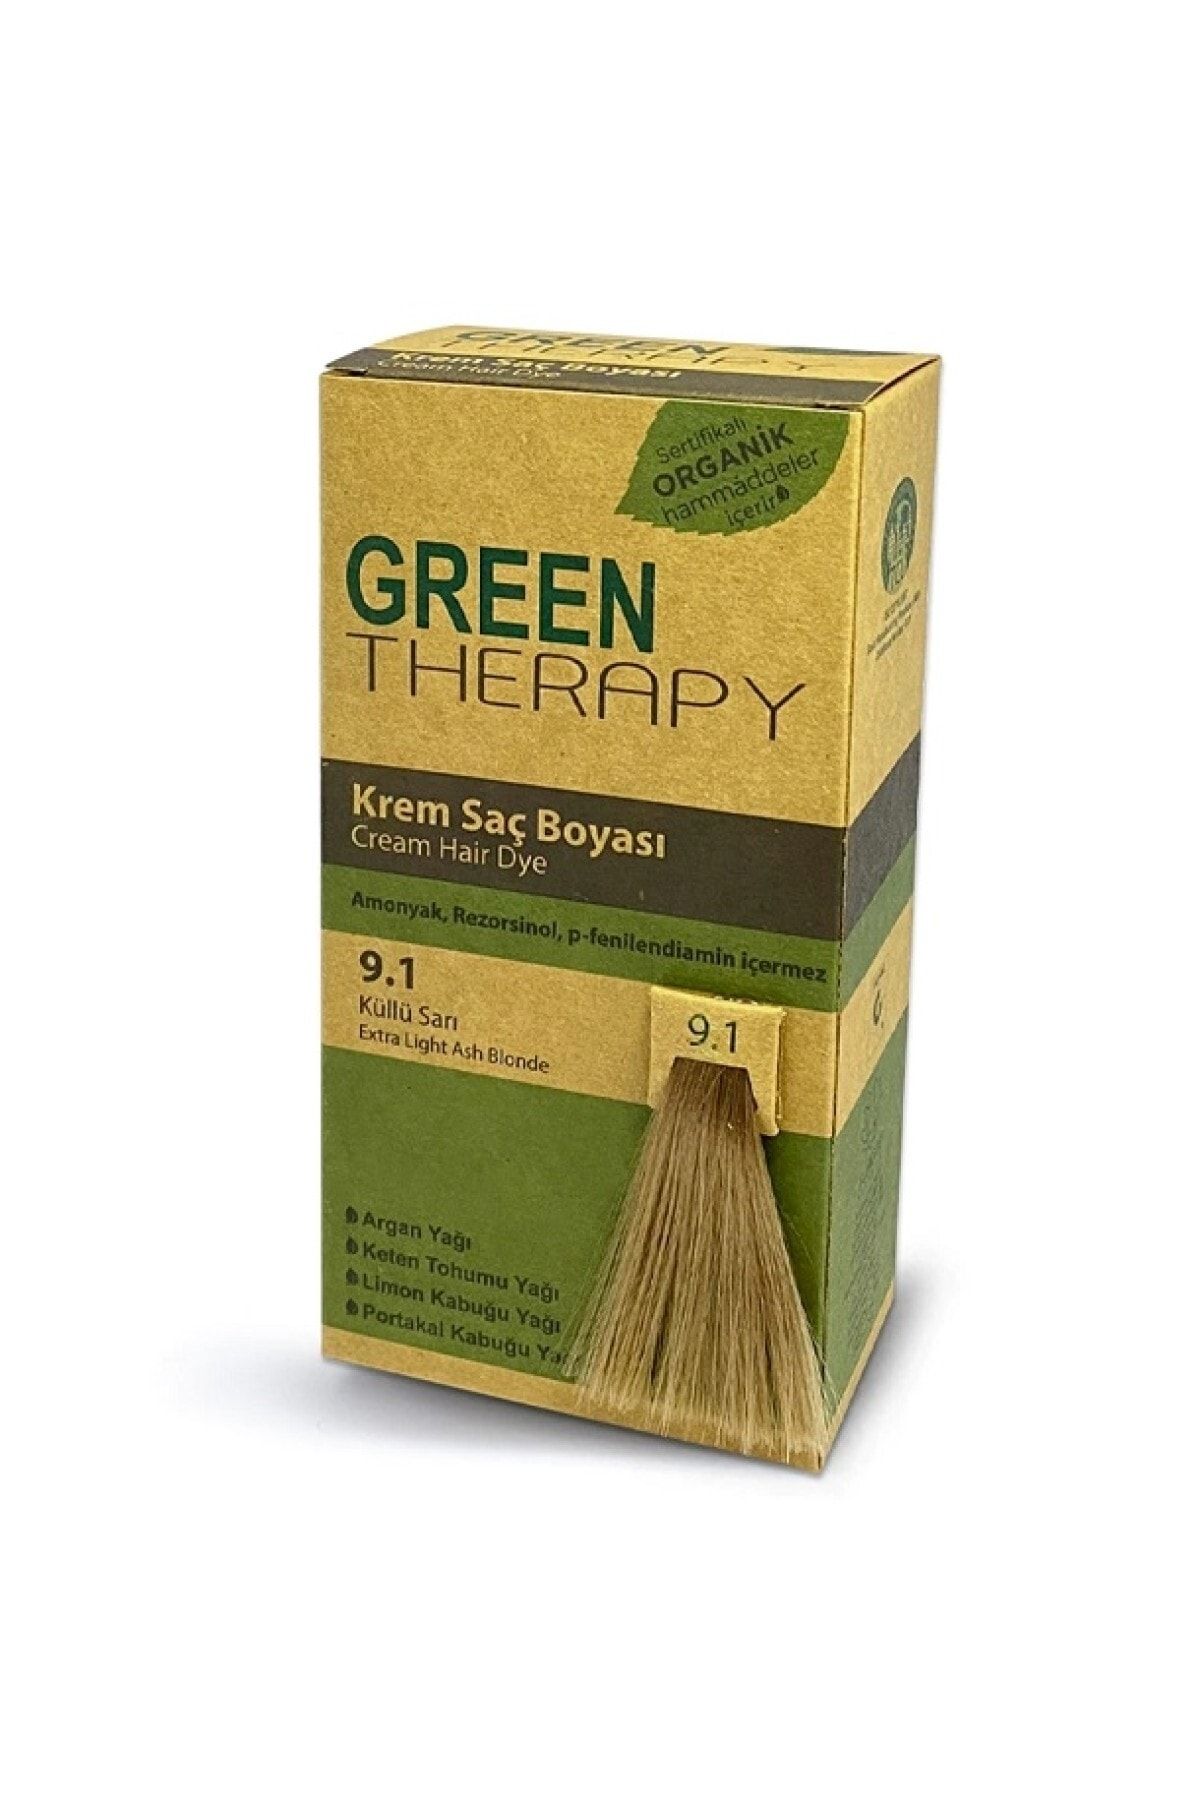 Green Therapy Krem Saç Boyası 9.1 Küllü Sarı